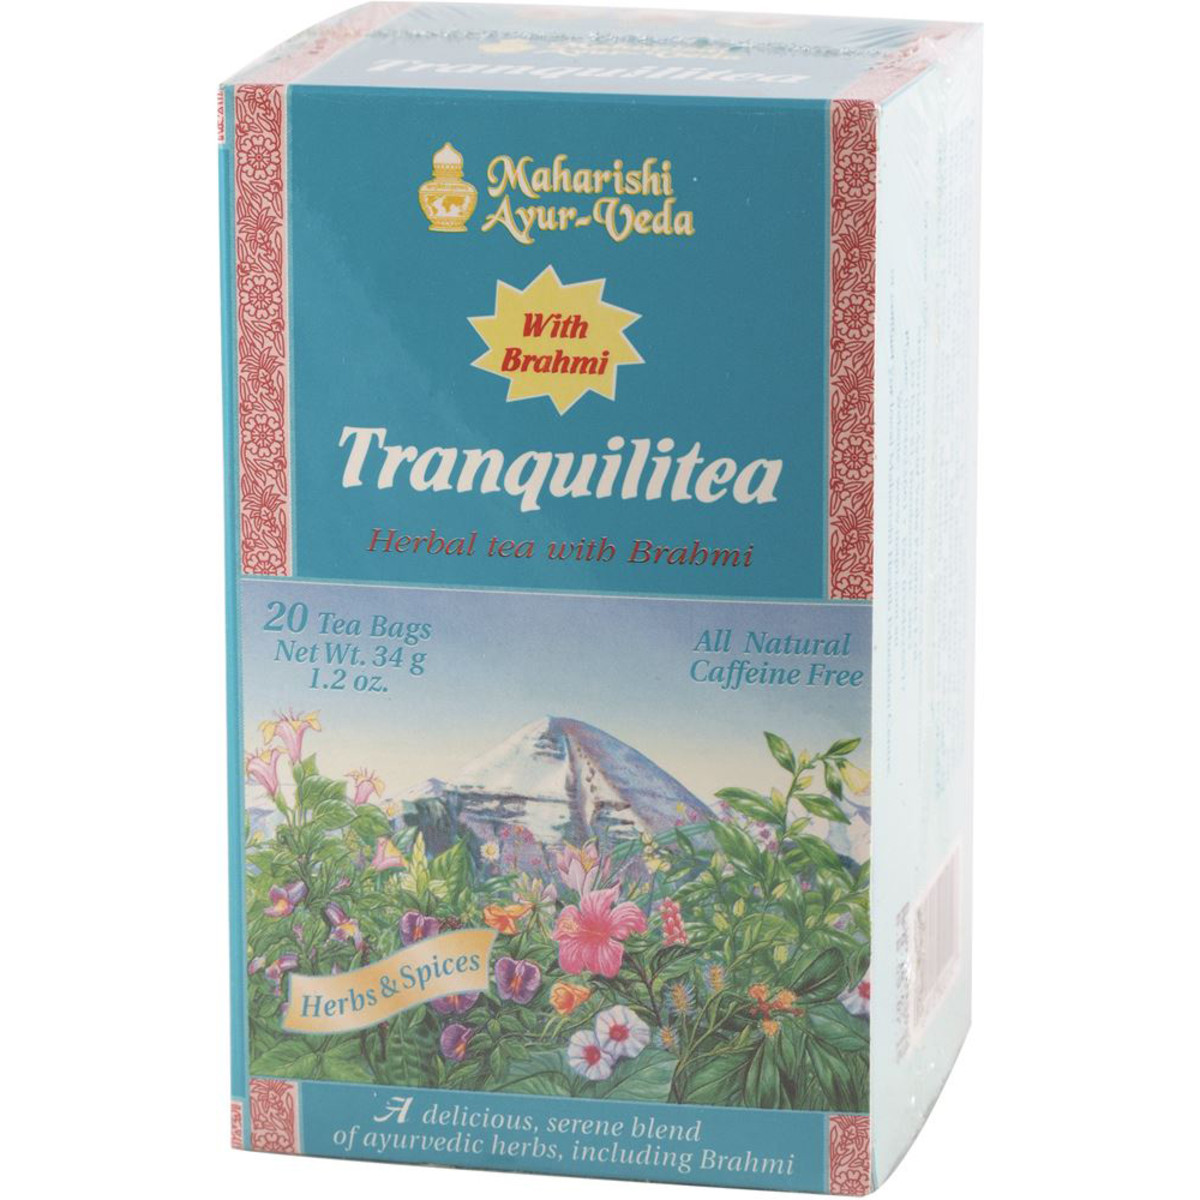 Maharishi Ayurveda Tranquilitea x 20 Tea Bags (34g)